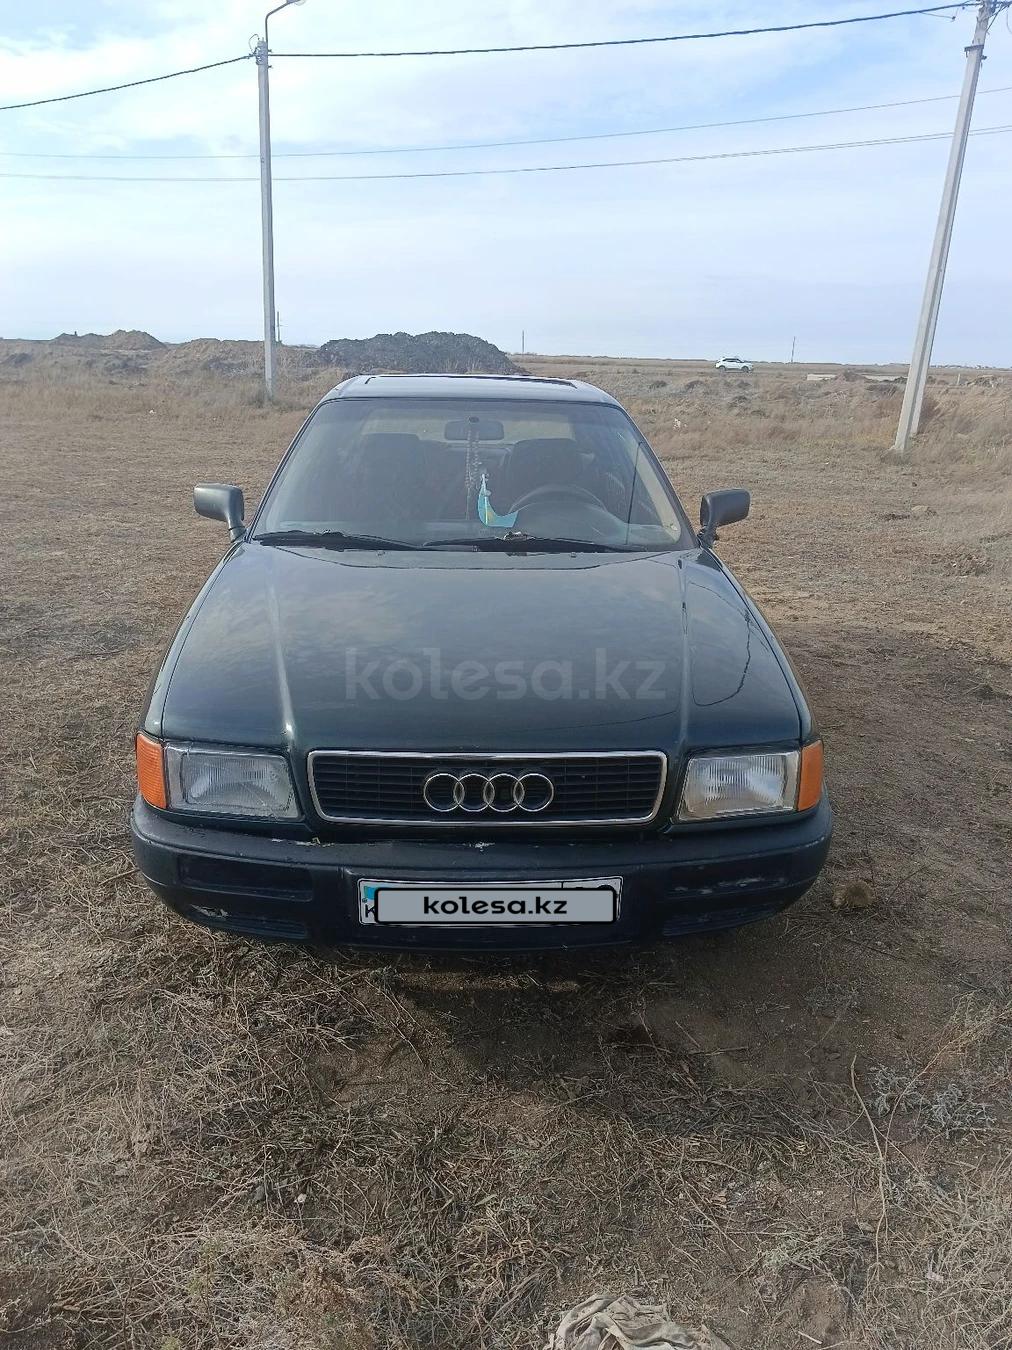 Audi 80 1992 г.